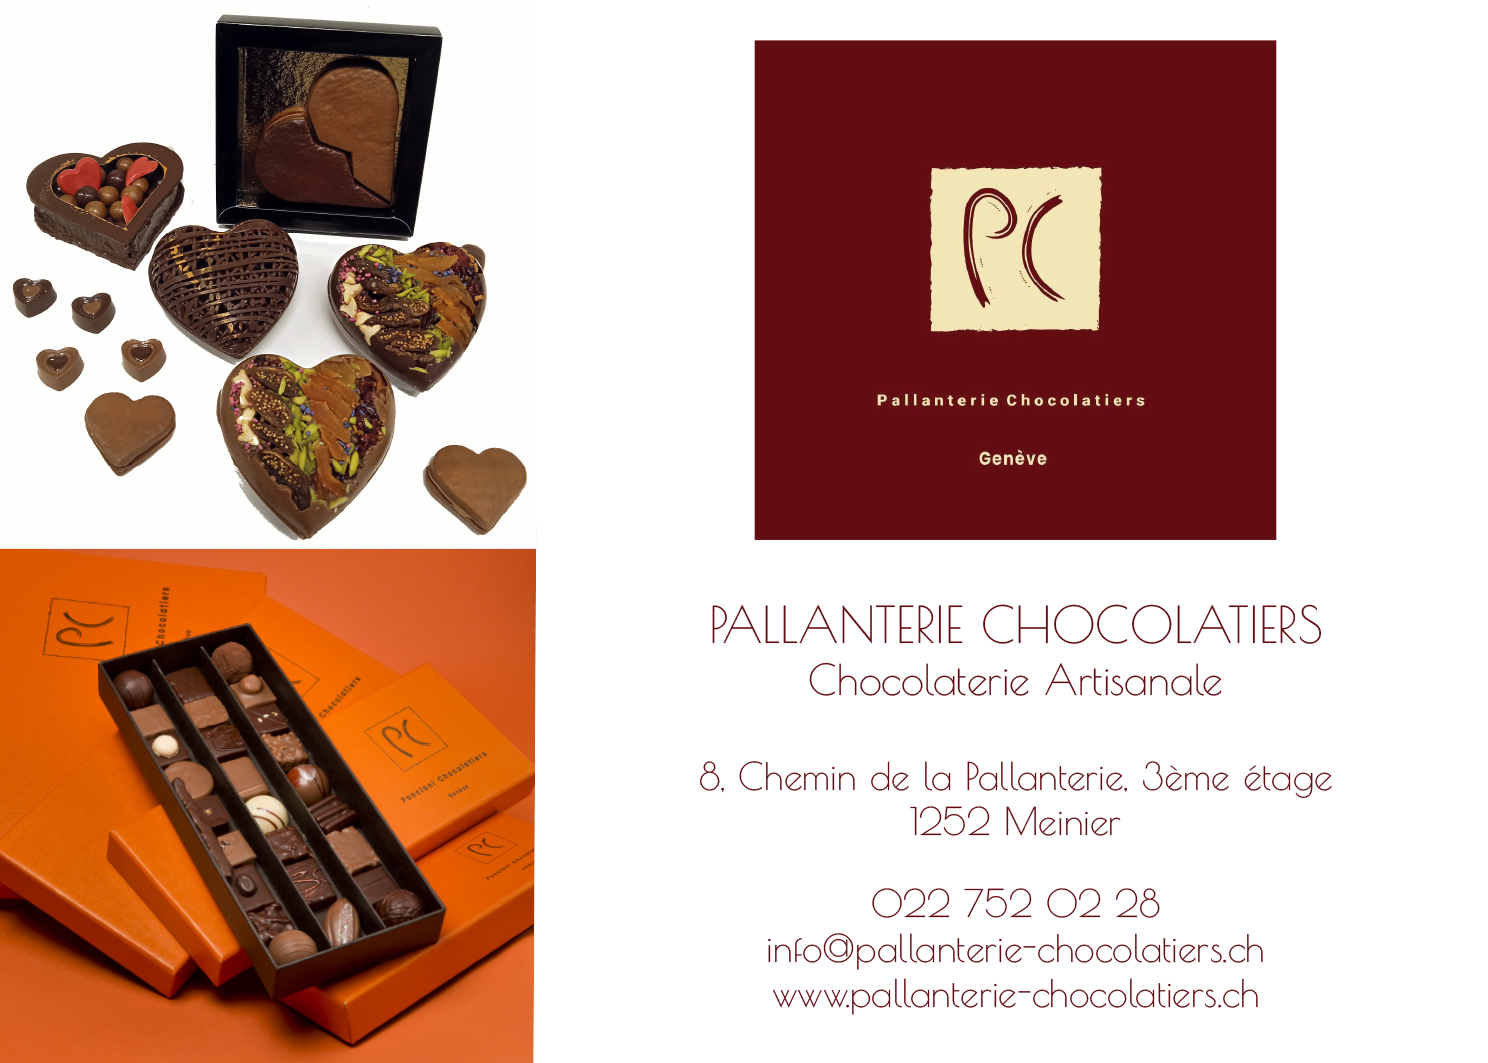 Pallanterie Chocolatiers